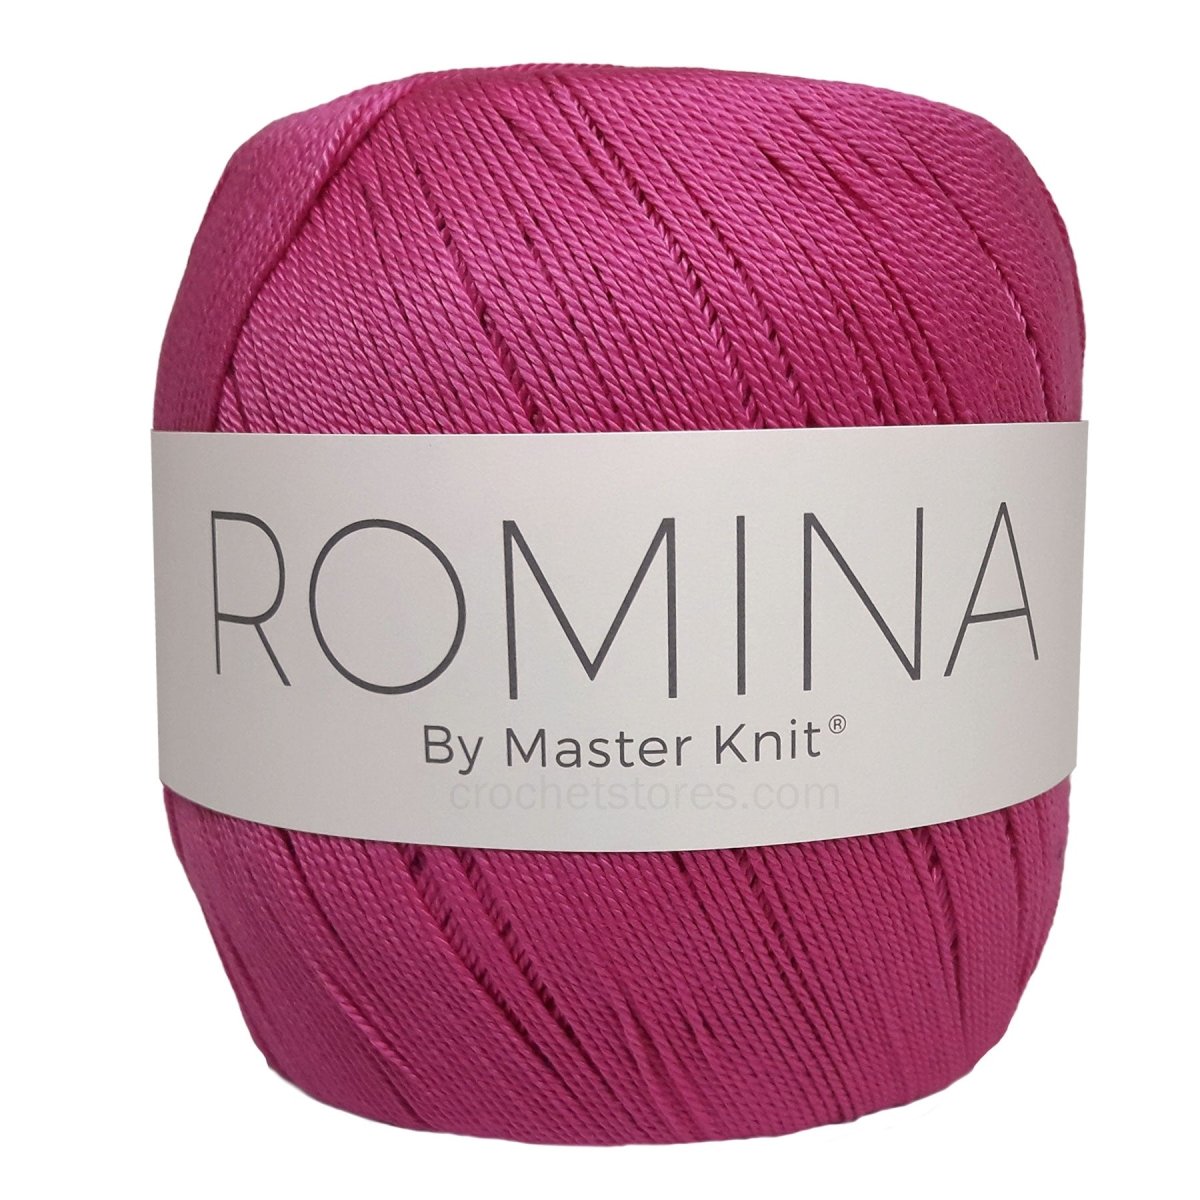 ROMINA - Crochetstores9335-243745051438586